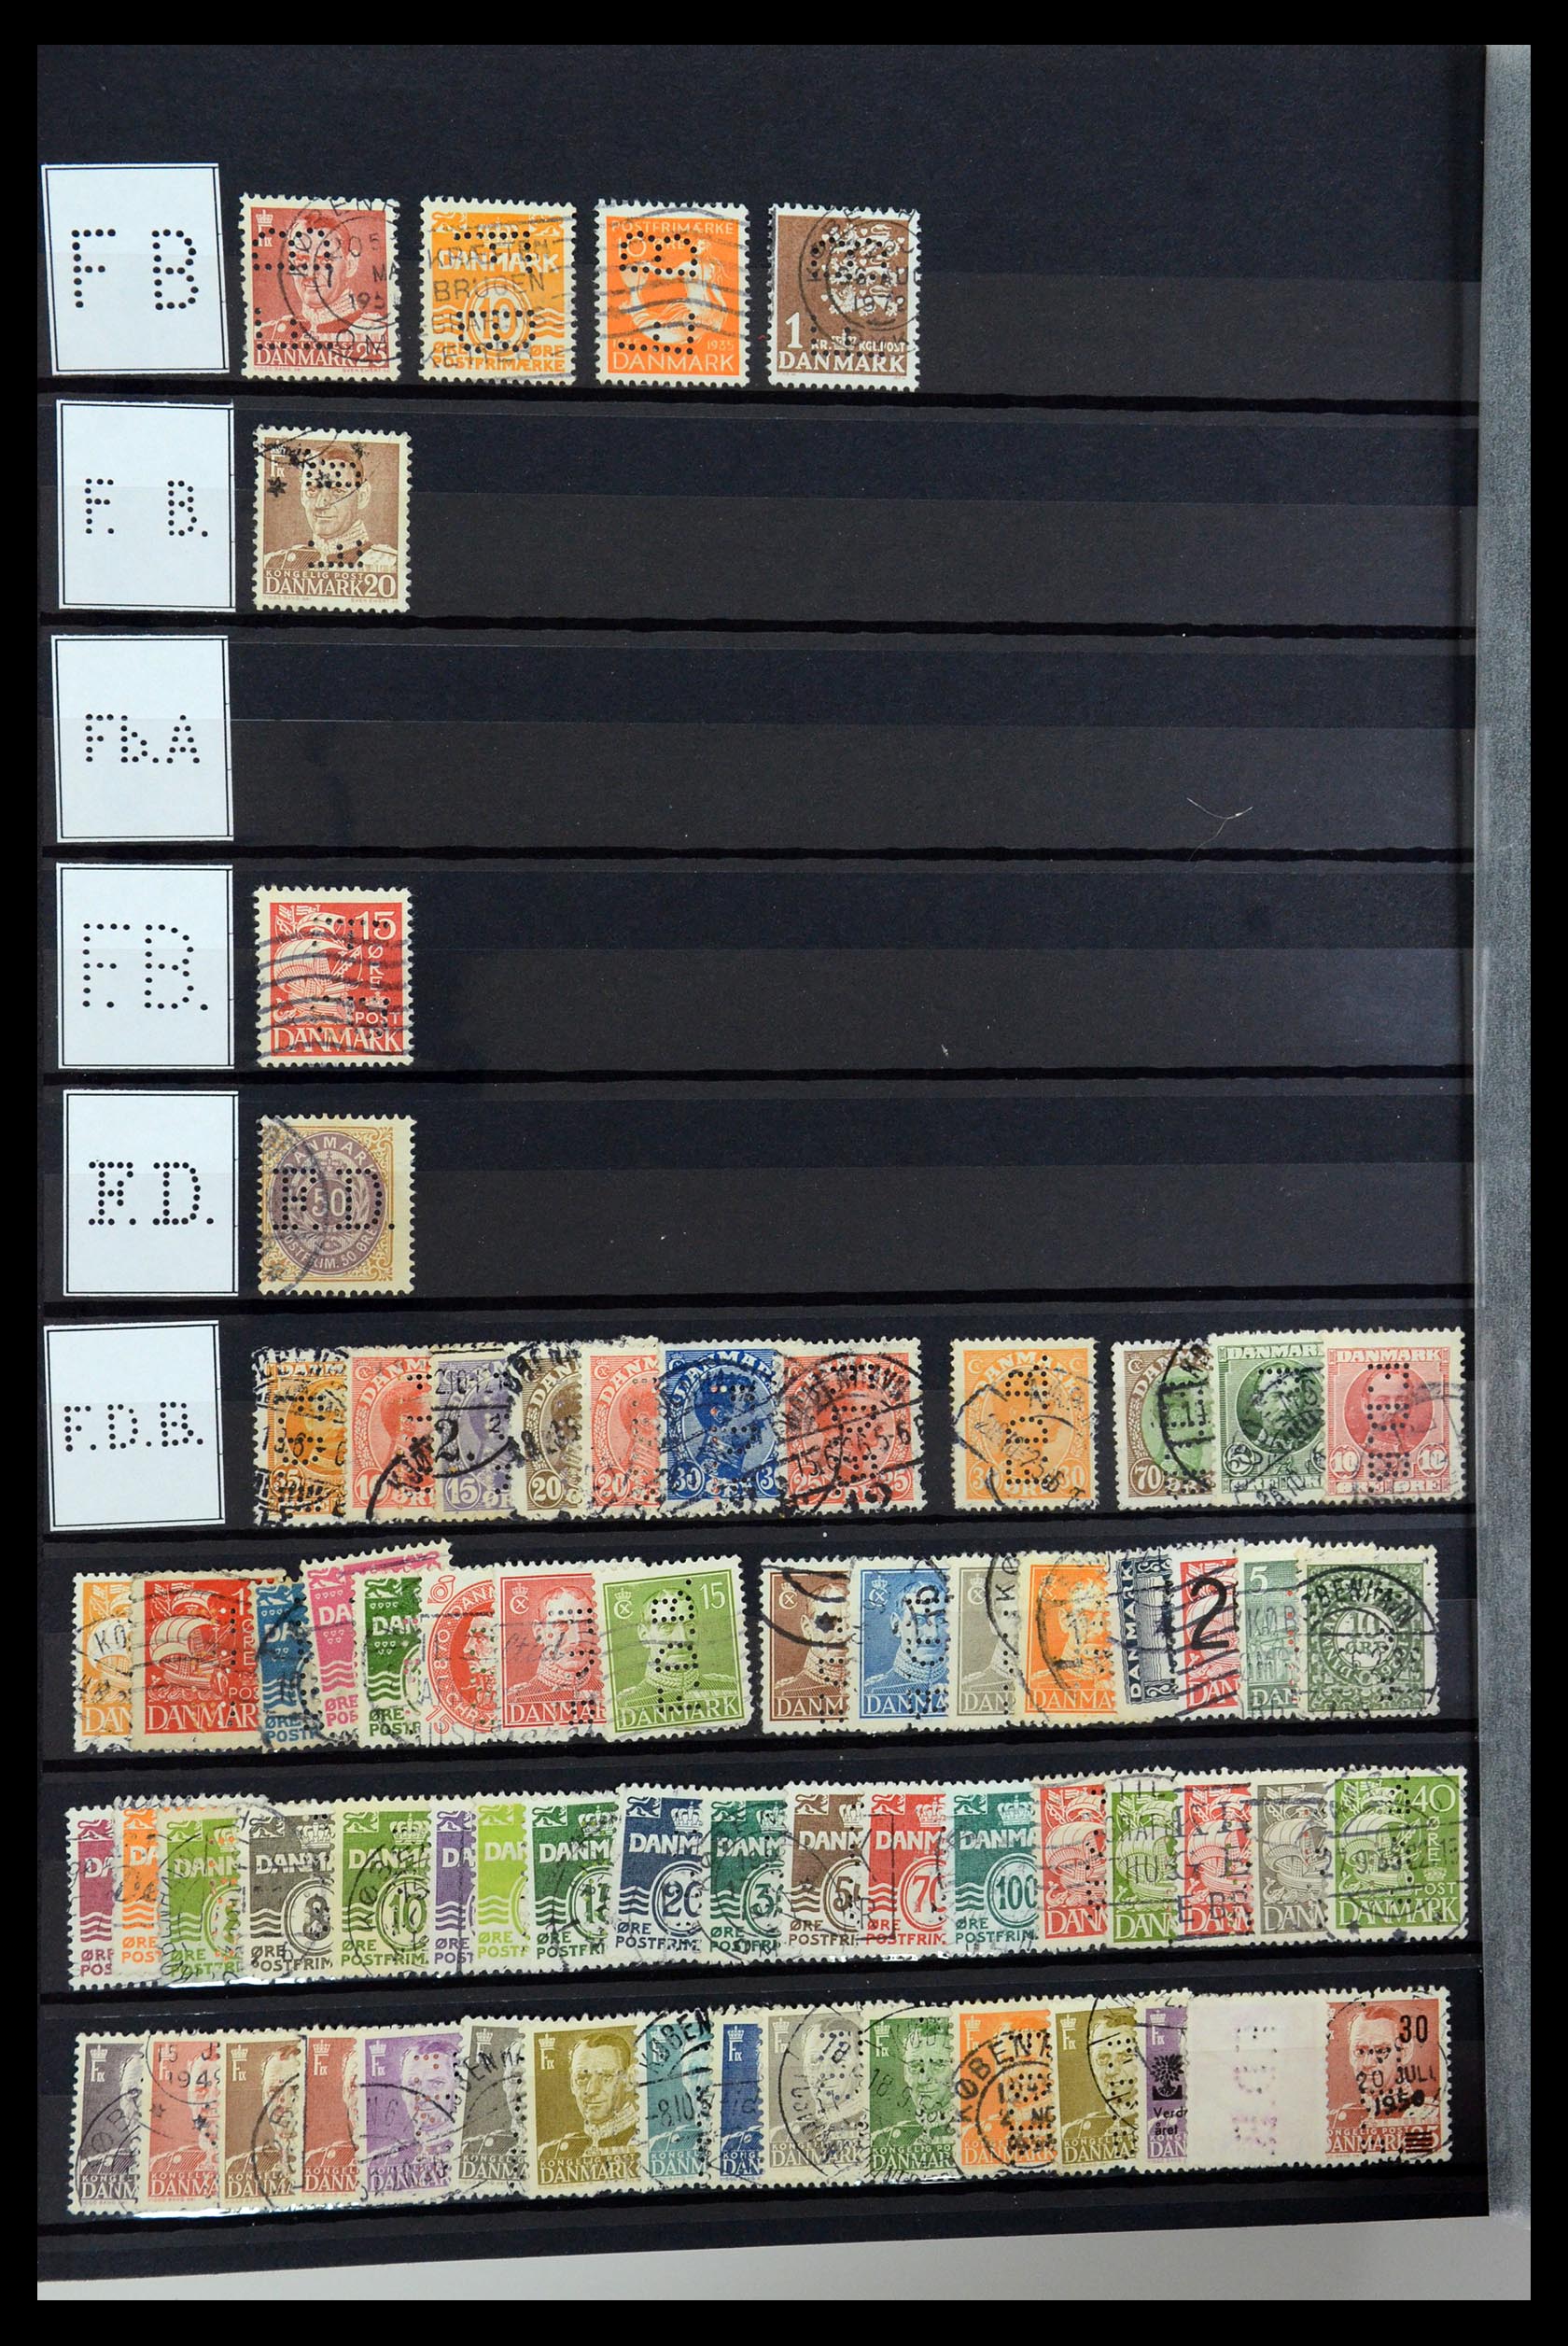 36396 049 - Stamp collection 36396 Denmark perfins.